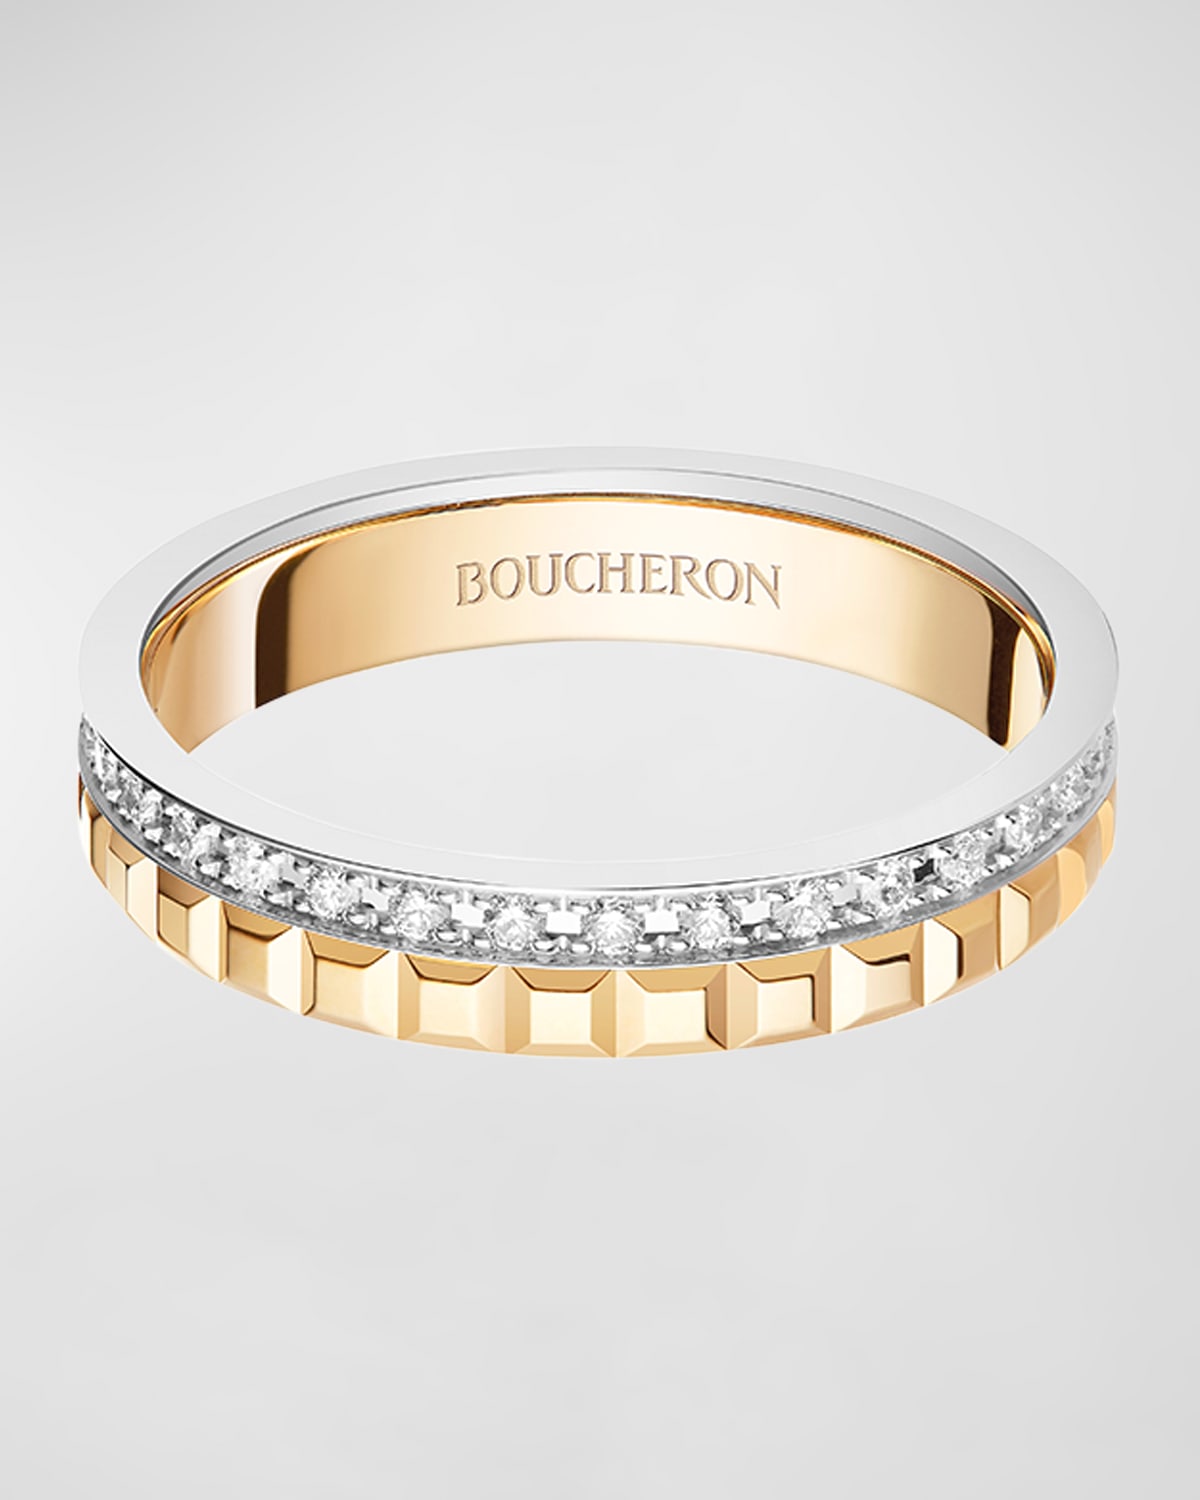 Boucheron Yellow Gold and White Gold Quatre Diamond Ring, Size 51